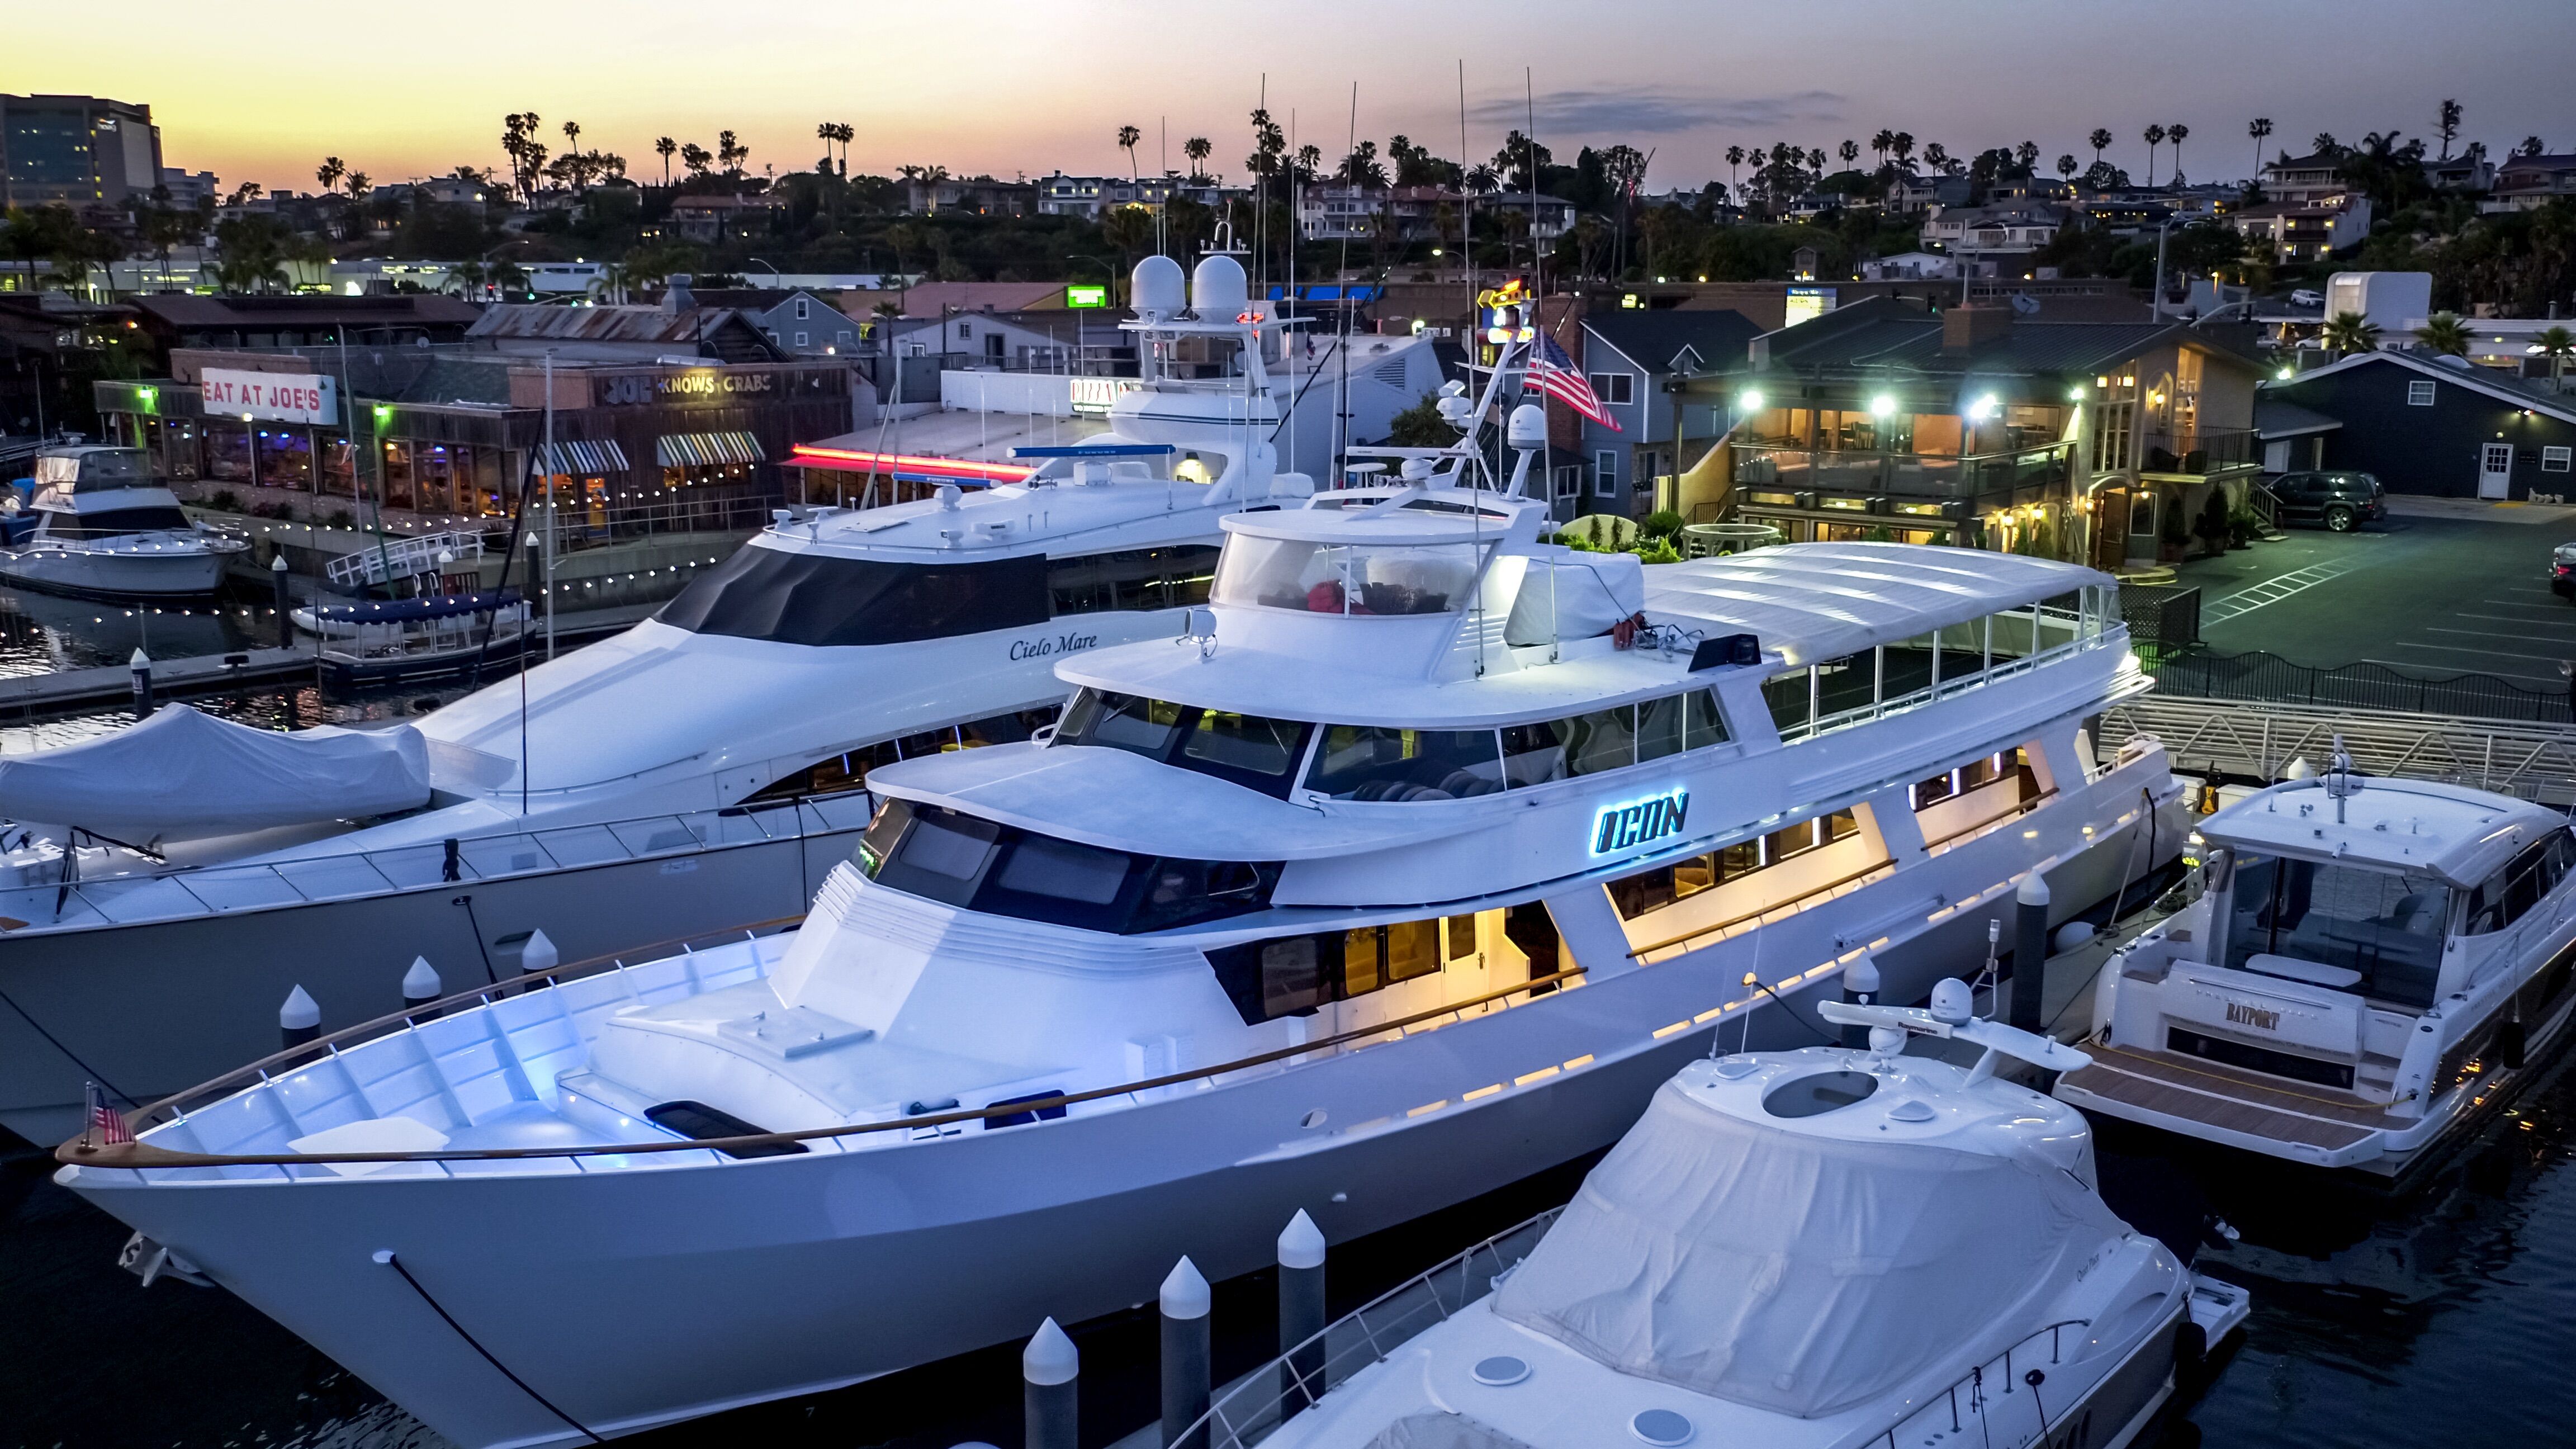 Charter Yachts Of Newport Beach | Reception Venues - Newport Beach, CA